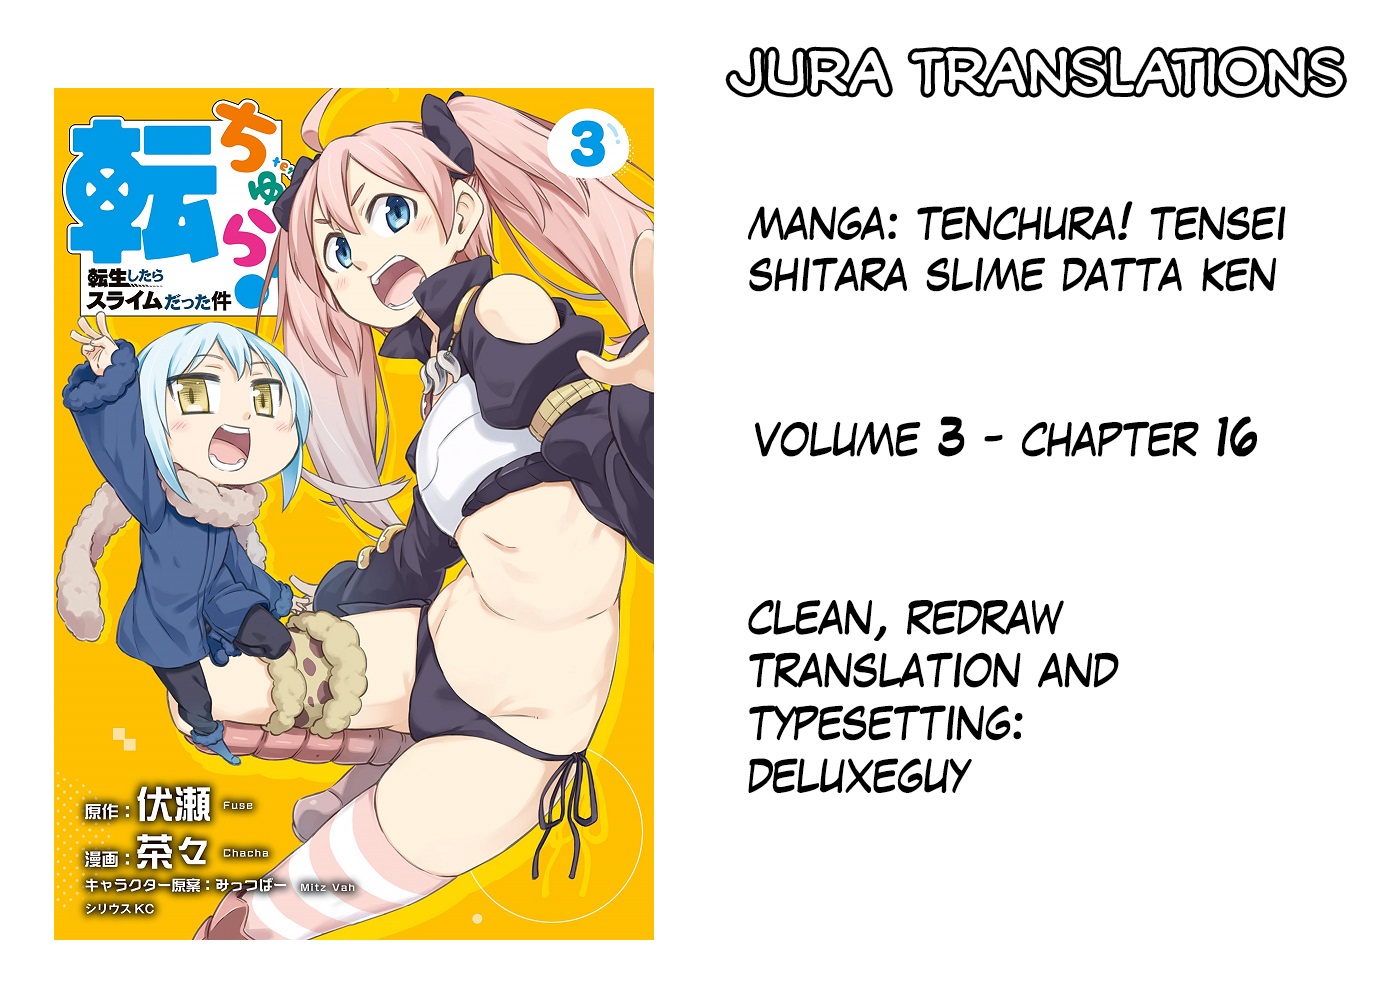 Tenchura! Tensei Shitara Slime Datta Ken Vol.3 Chapter 16: Let's Work Together! - Picture 1